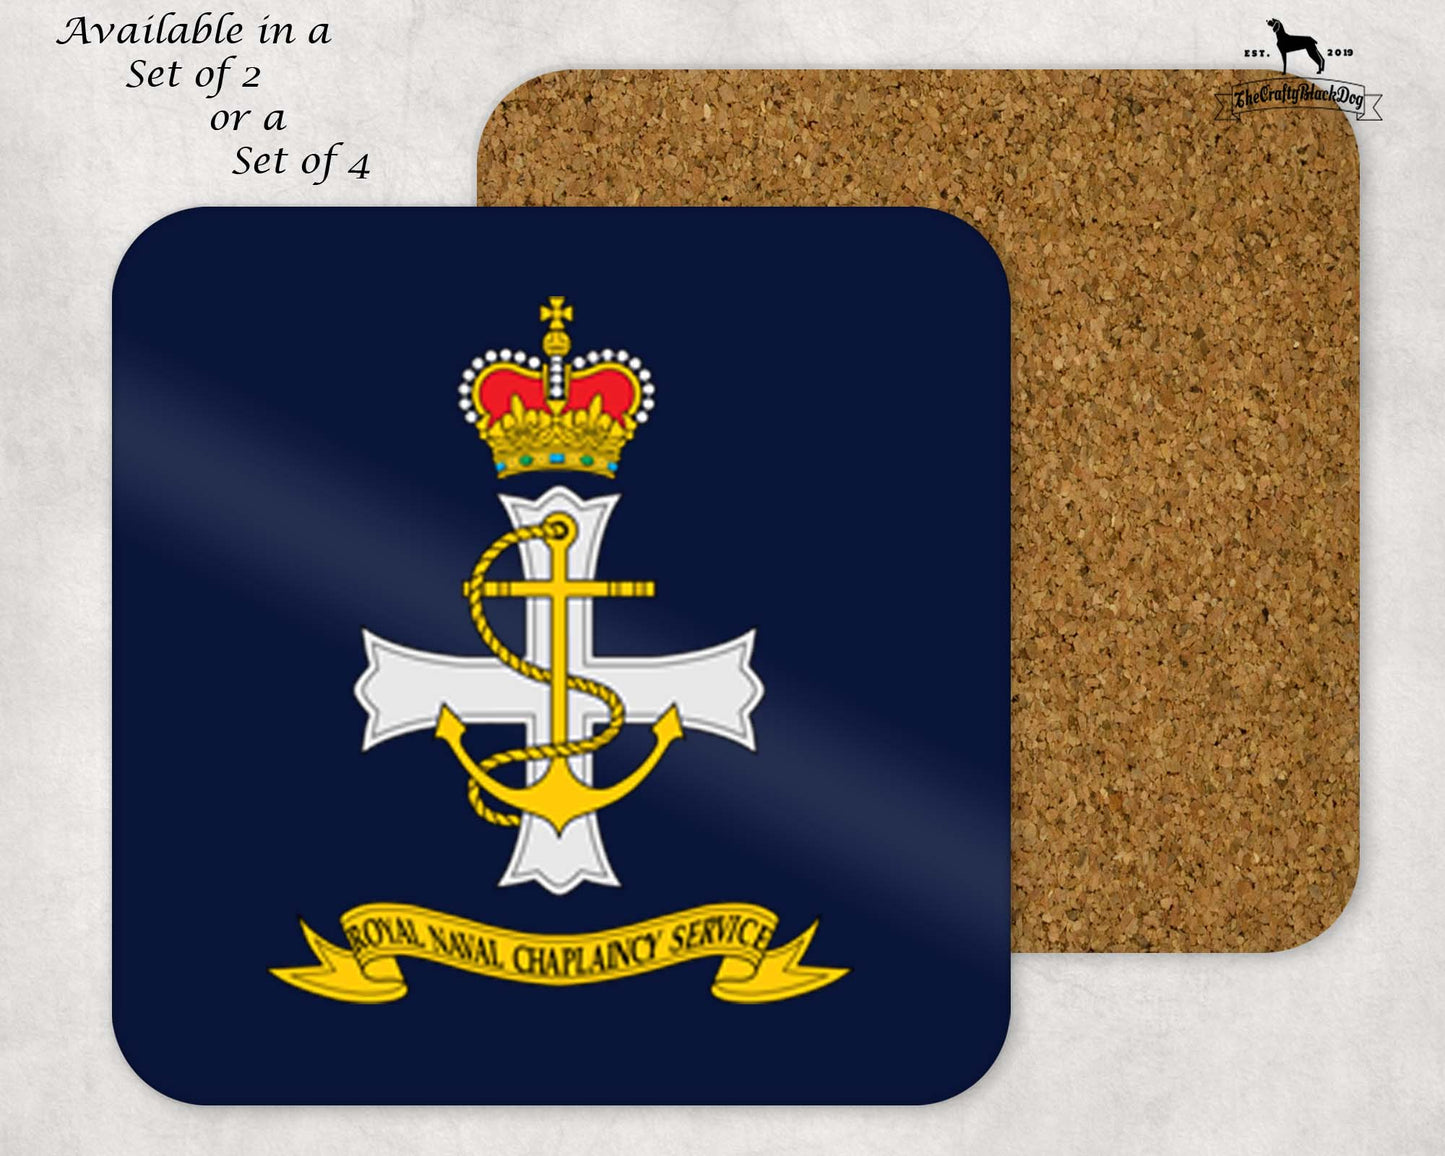 Royal Naval Chaplaincy Service - Coaster Set